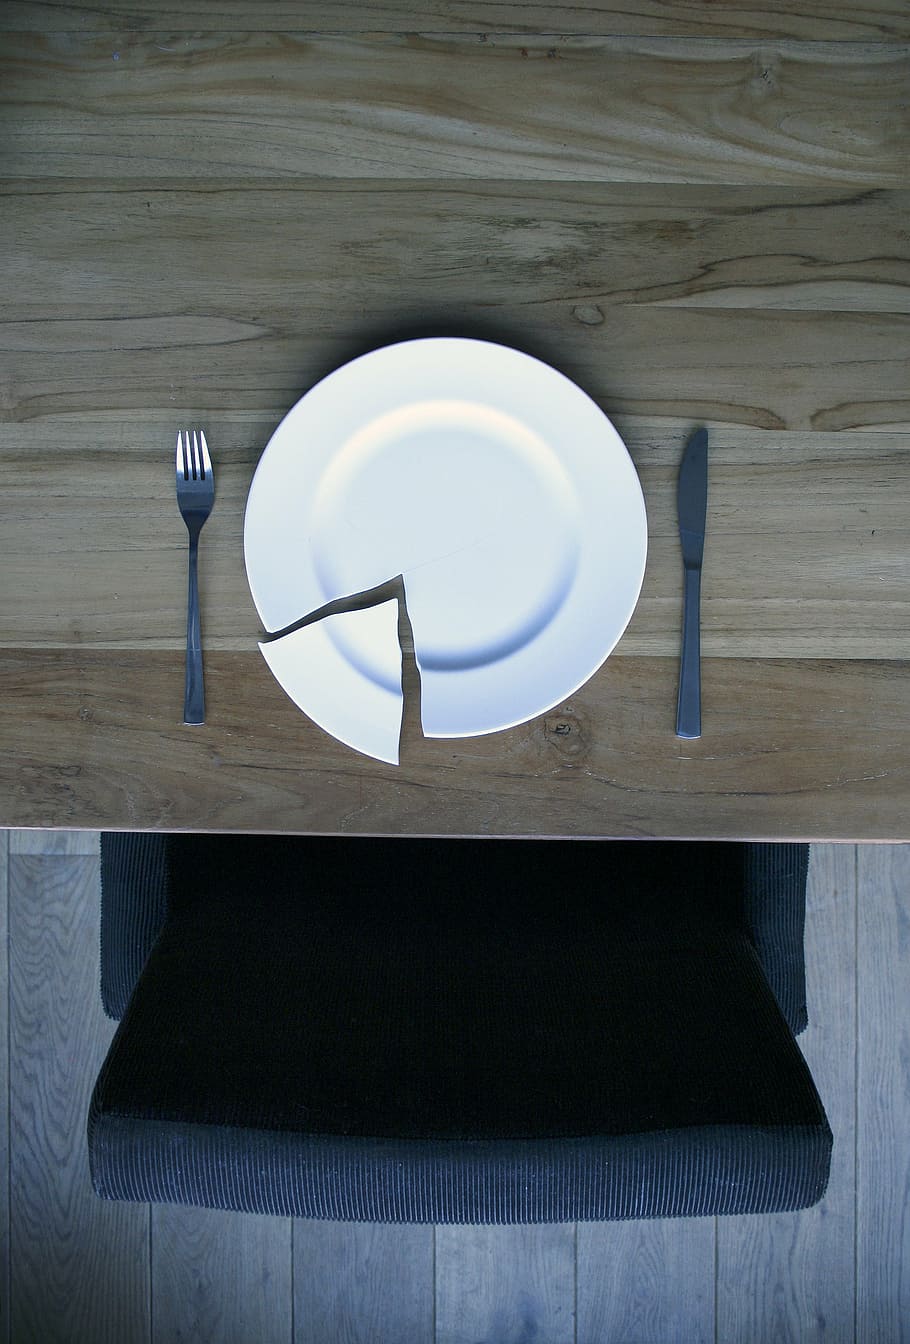 broken, round, white, ceramic, plate, gray, stainless, steel fork, butter spreader, broken plate on a wooden table